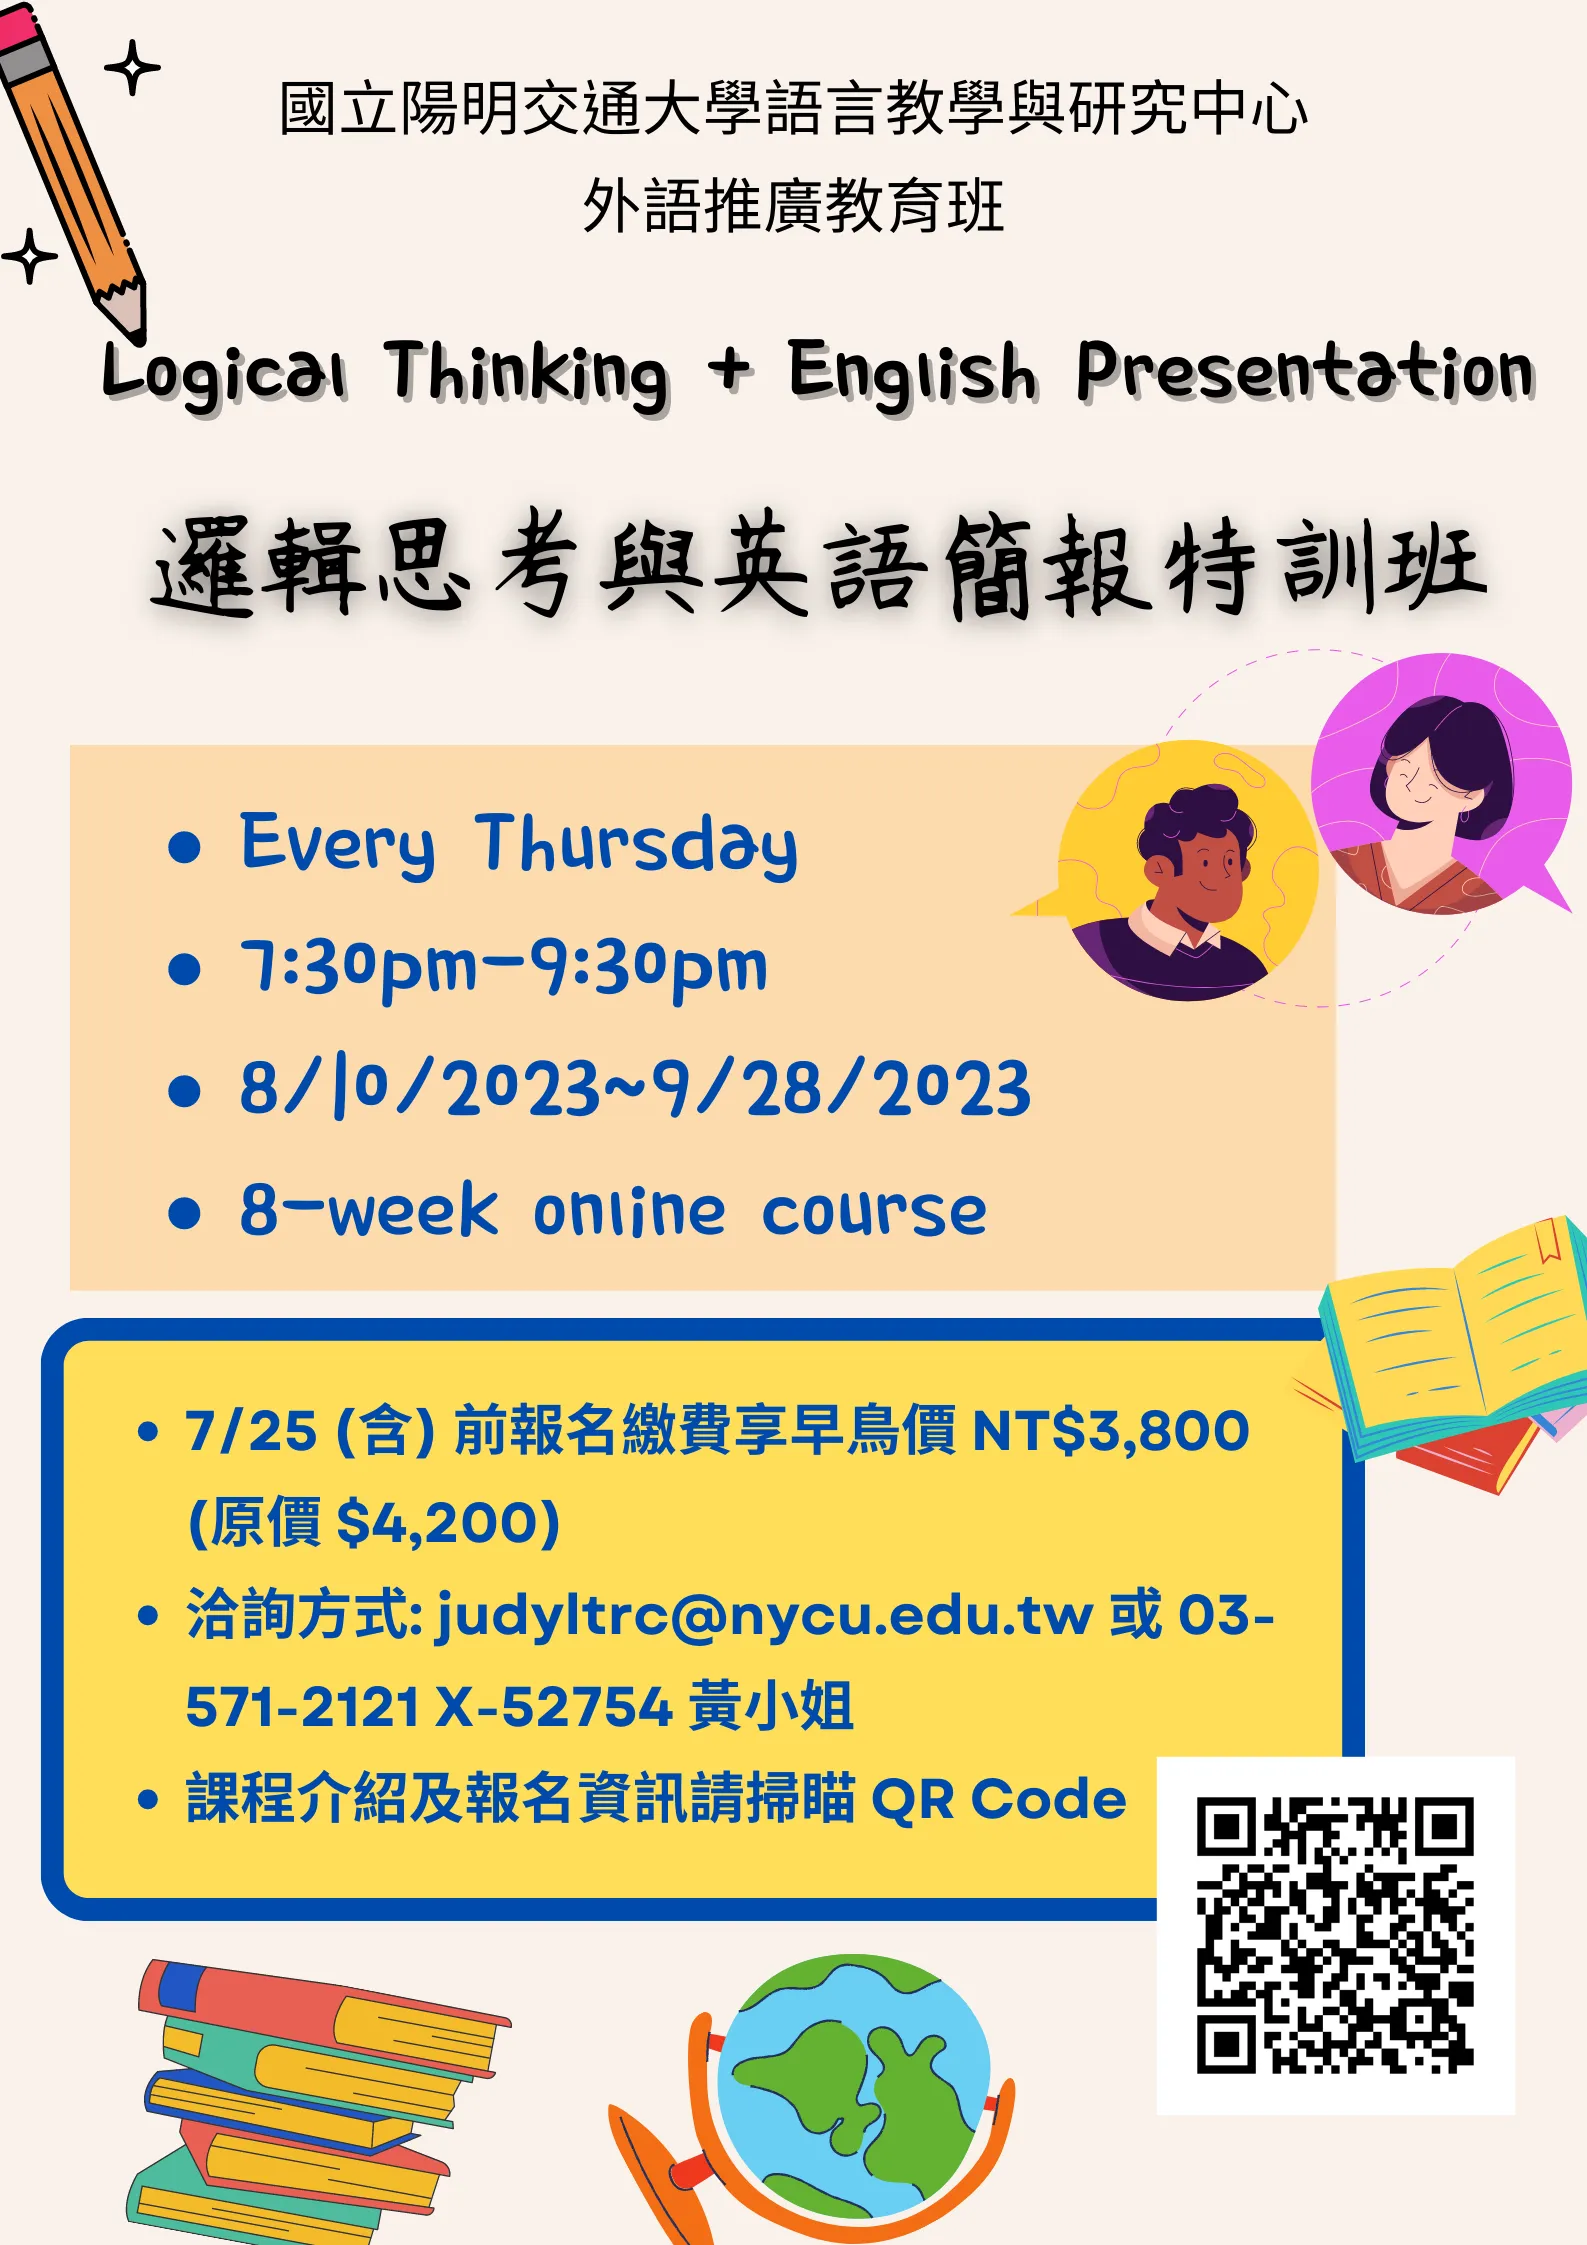 LOGICAL THINKING + ENGLISH PRESENATION 邏輯思考與英語簡報特訓班